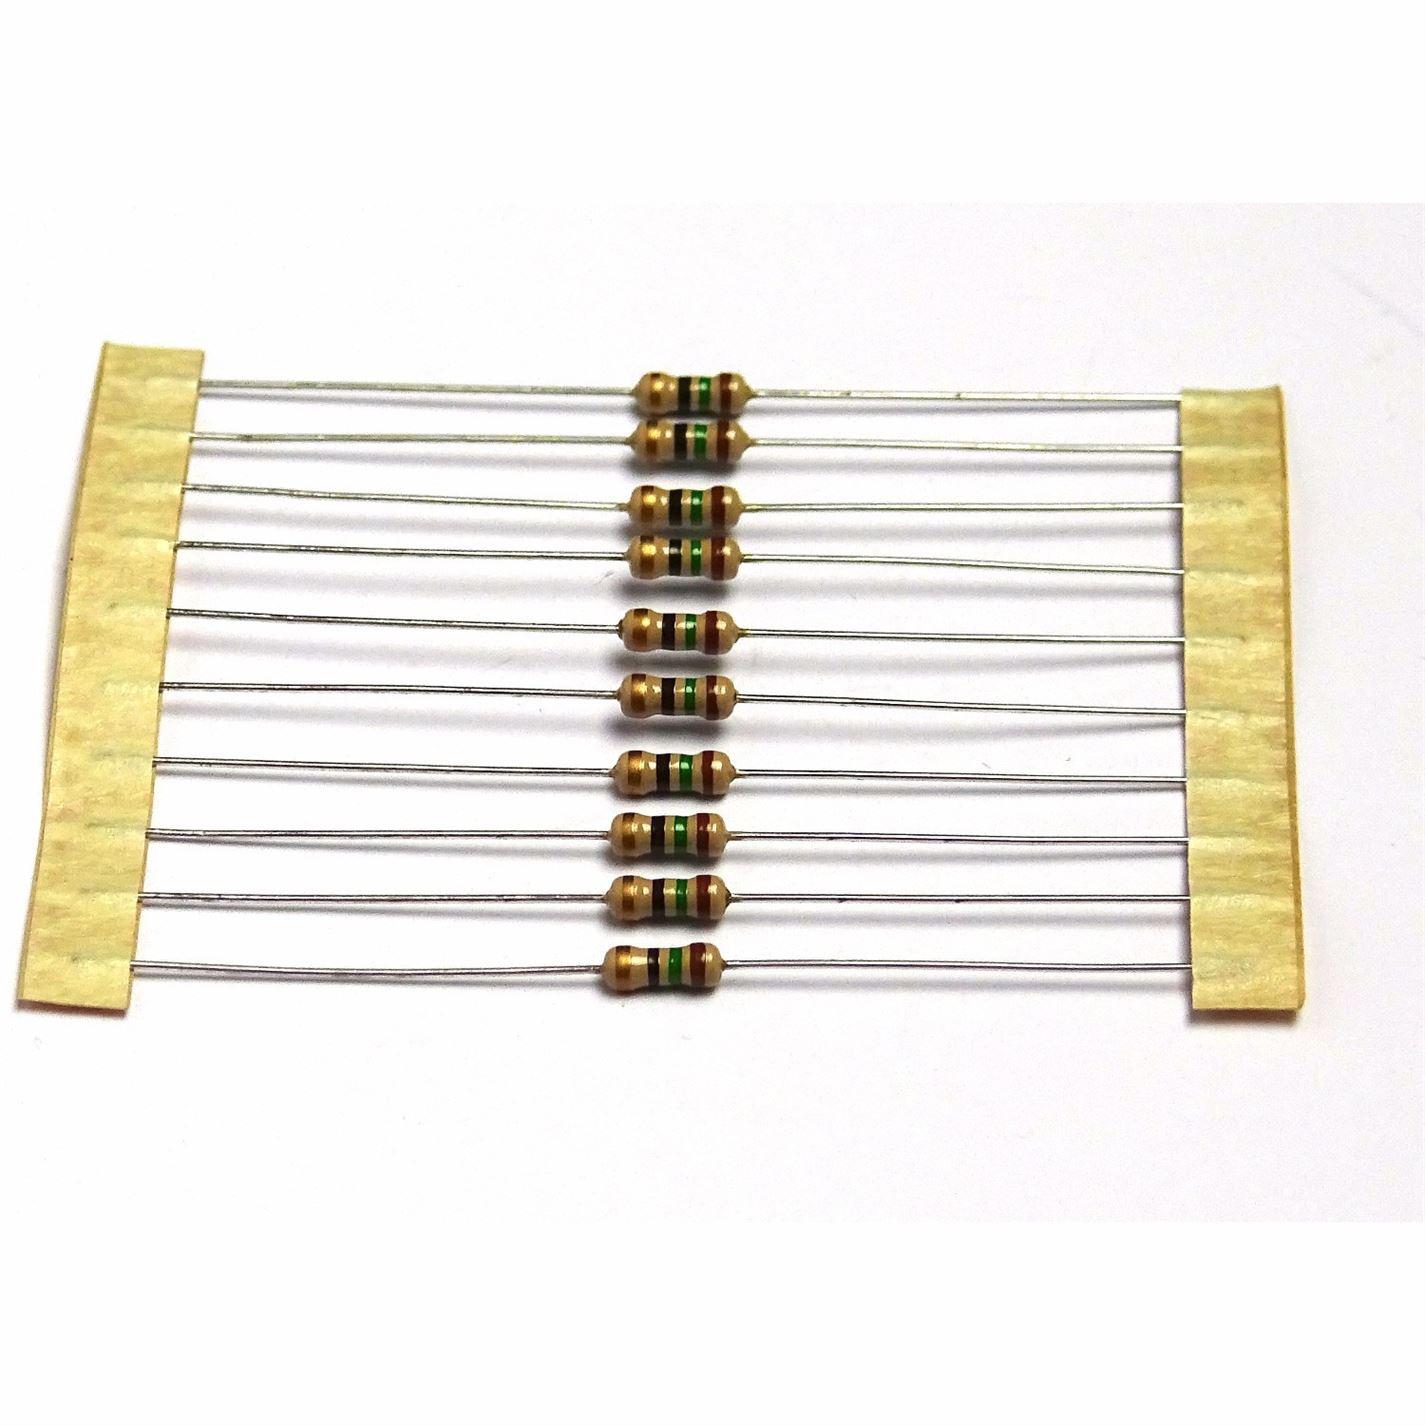 10 x Resistors 15 OHM Ohms 1/4W 0.25W 5% Carbon Film - UK Seller